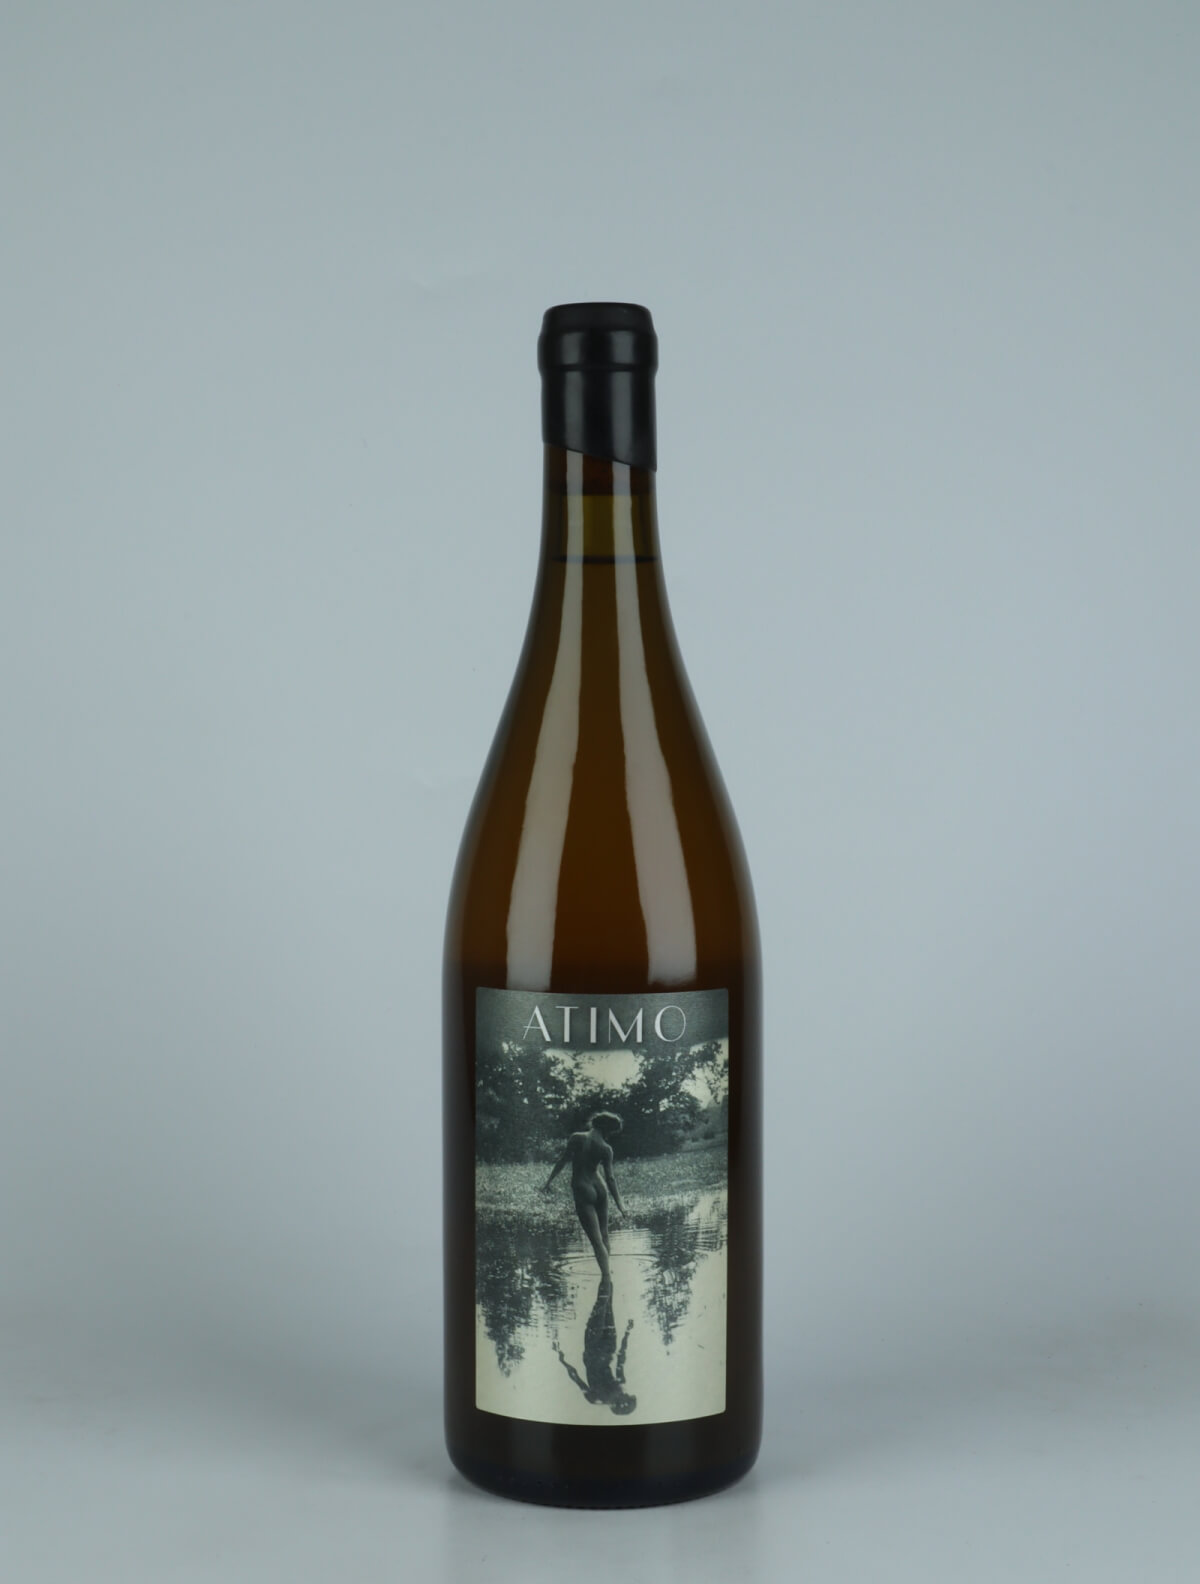 A bottle 2021 Rebula Orange wine from Atimo, Istria in Croatia